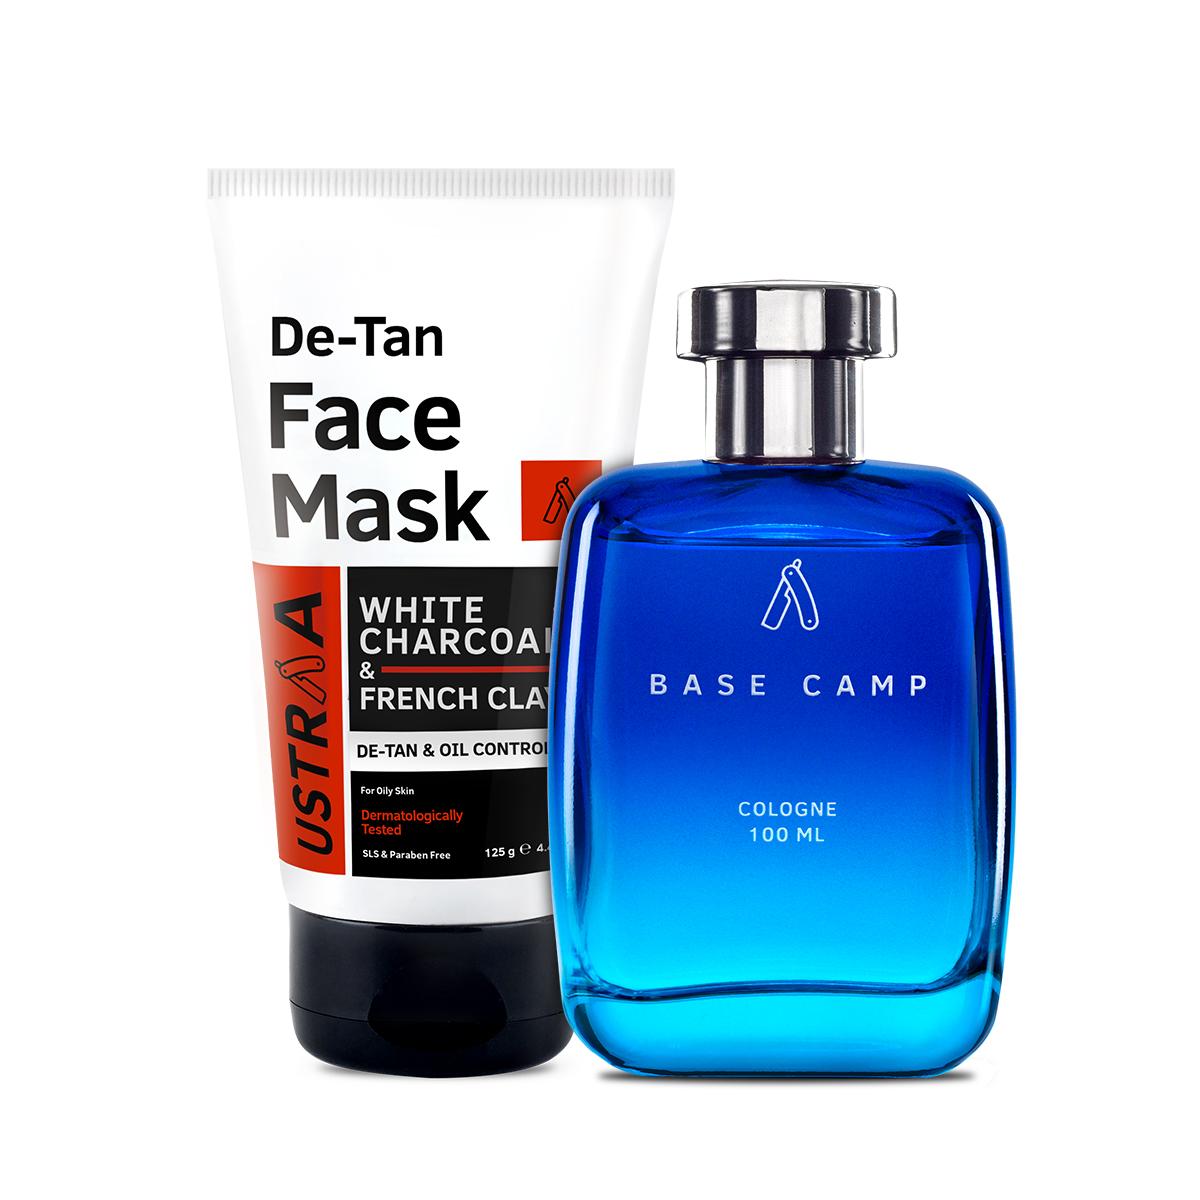 Face Mask - Oily Skin & Base Camp Cologne - 100 ml - Perfume for Men